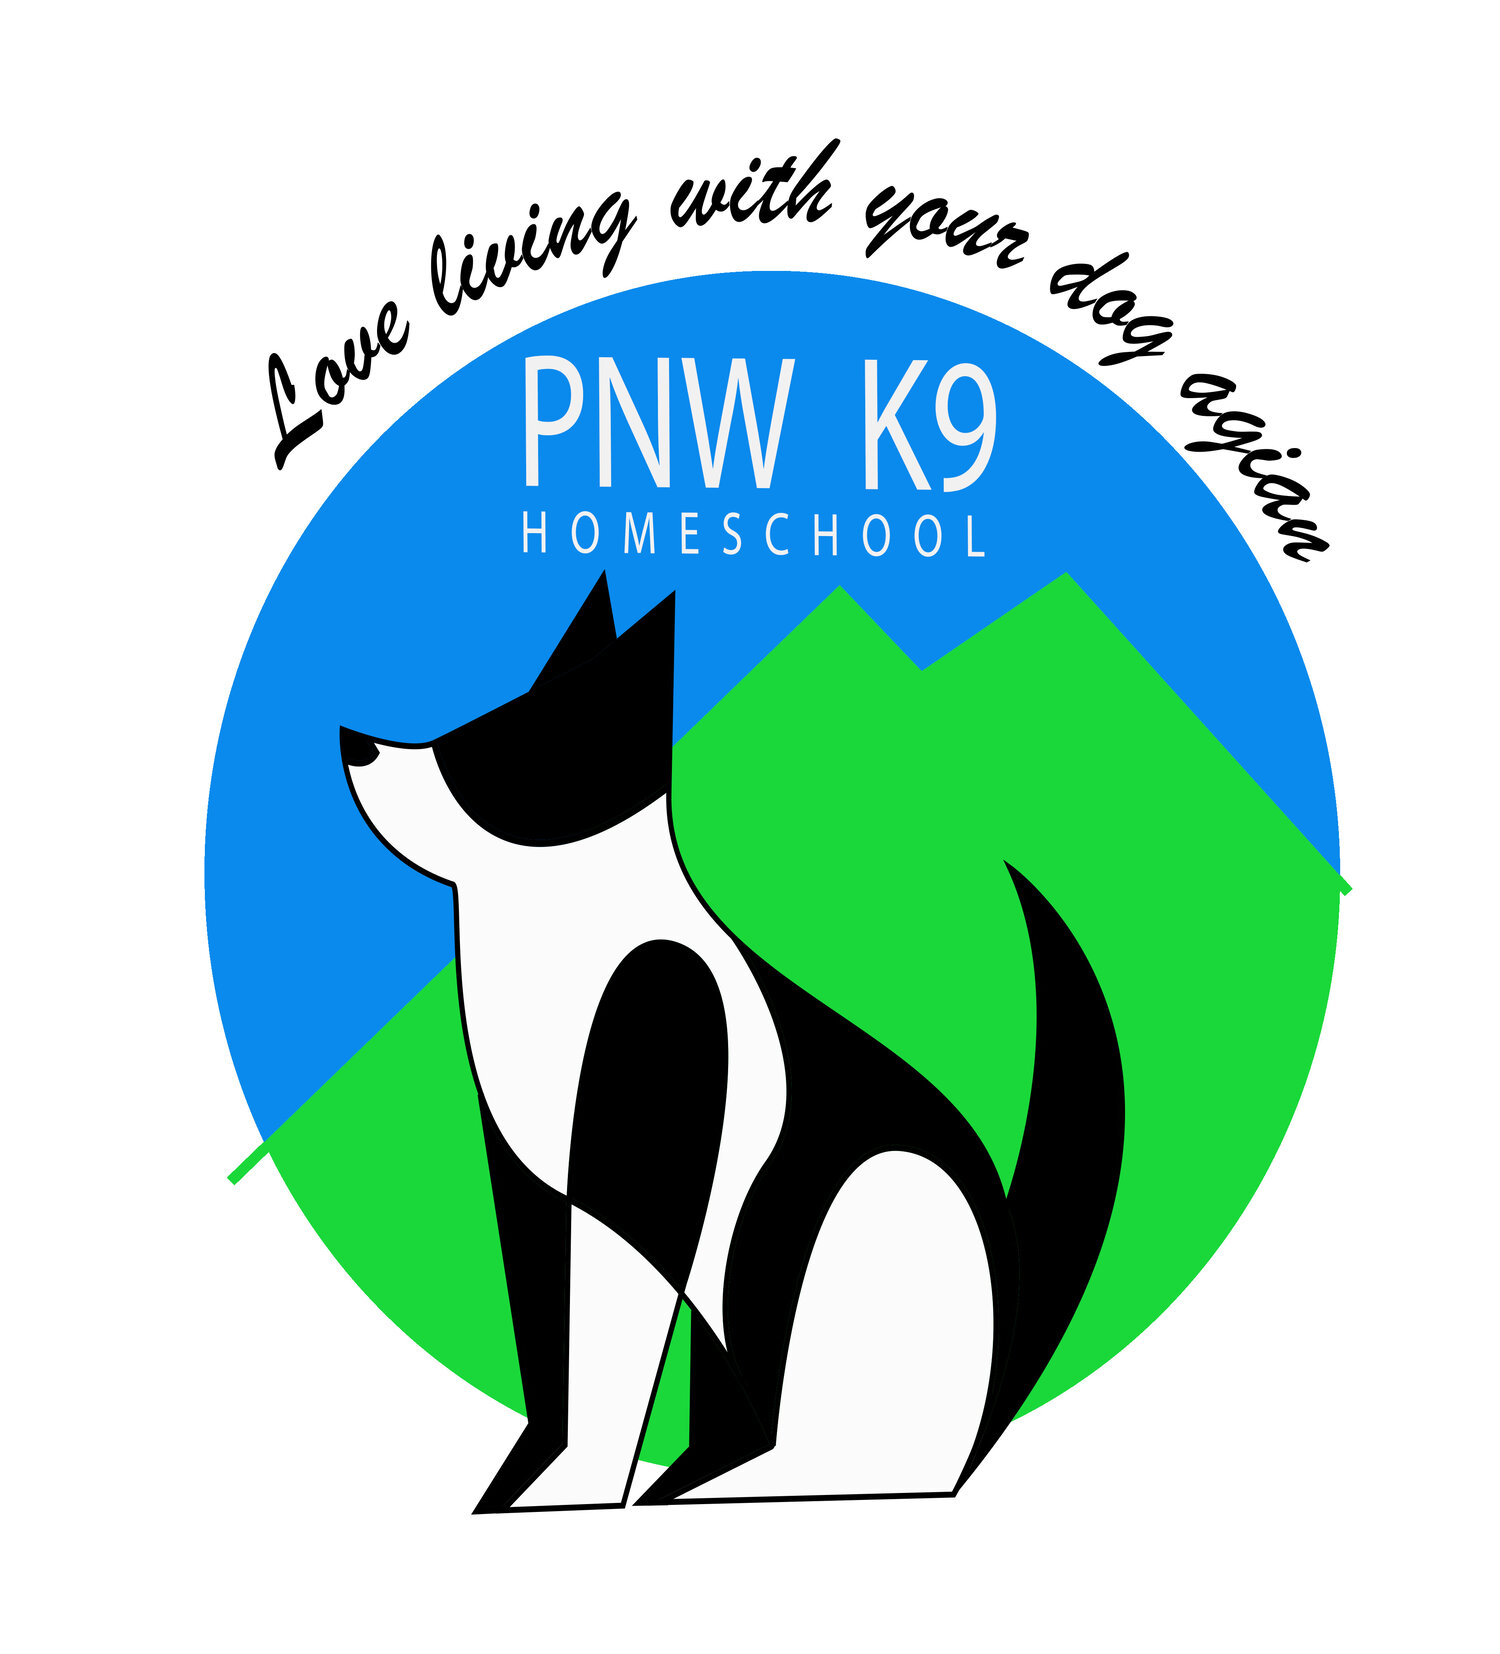 PNW K9 Homeschool